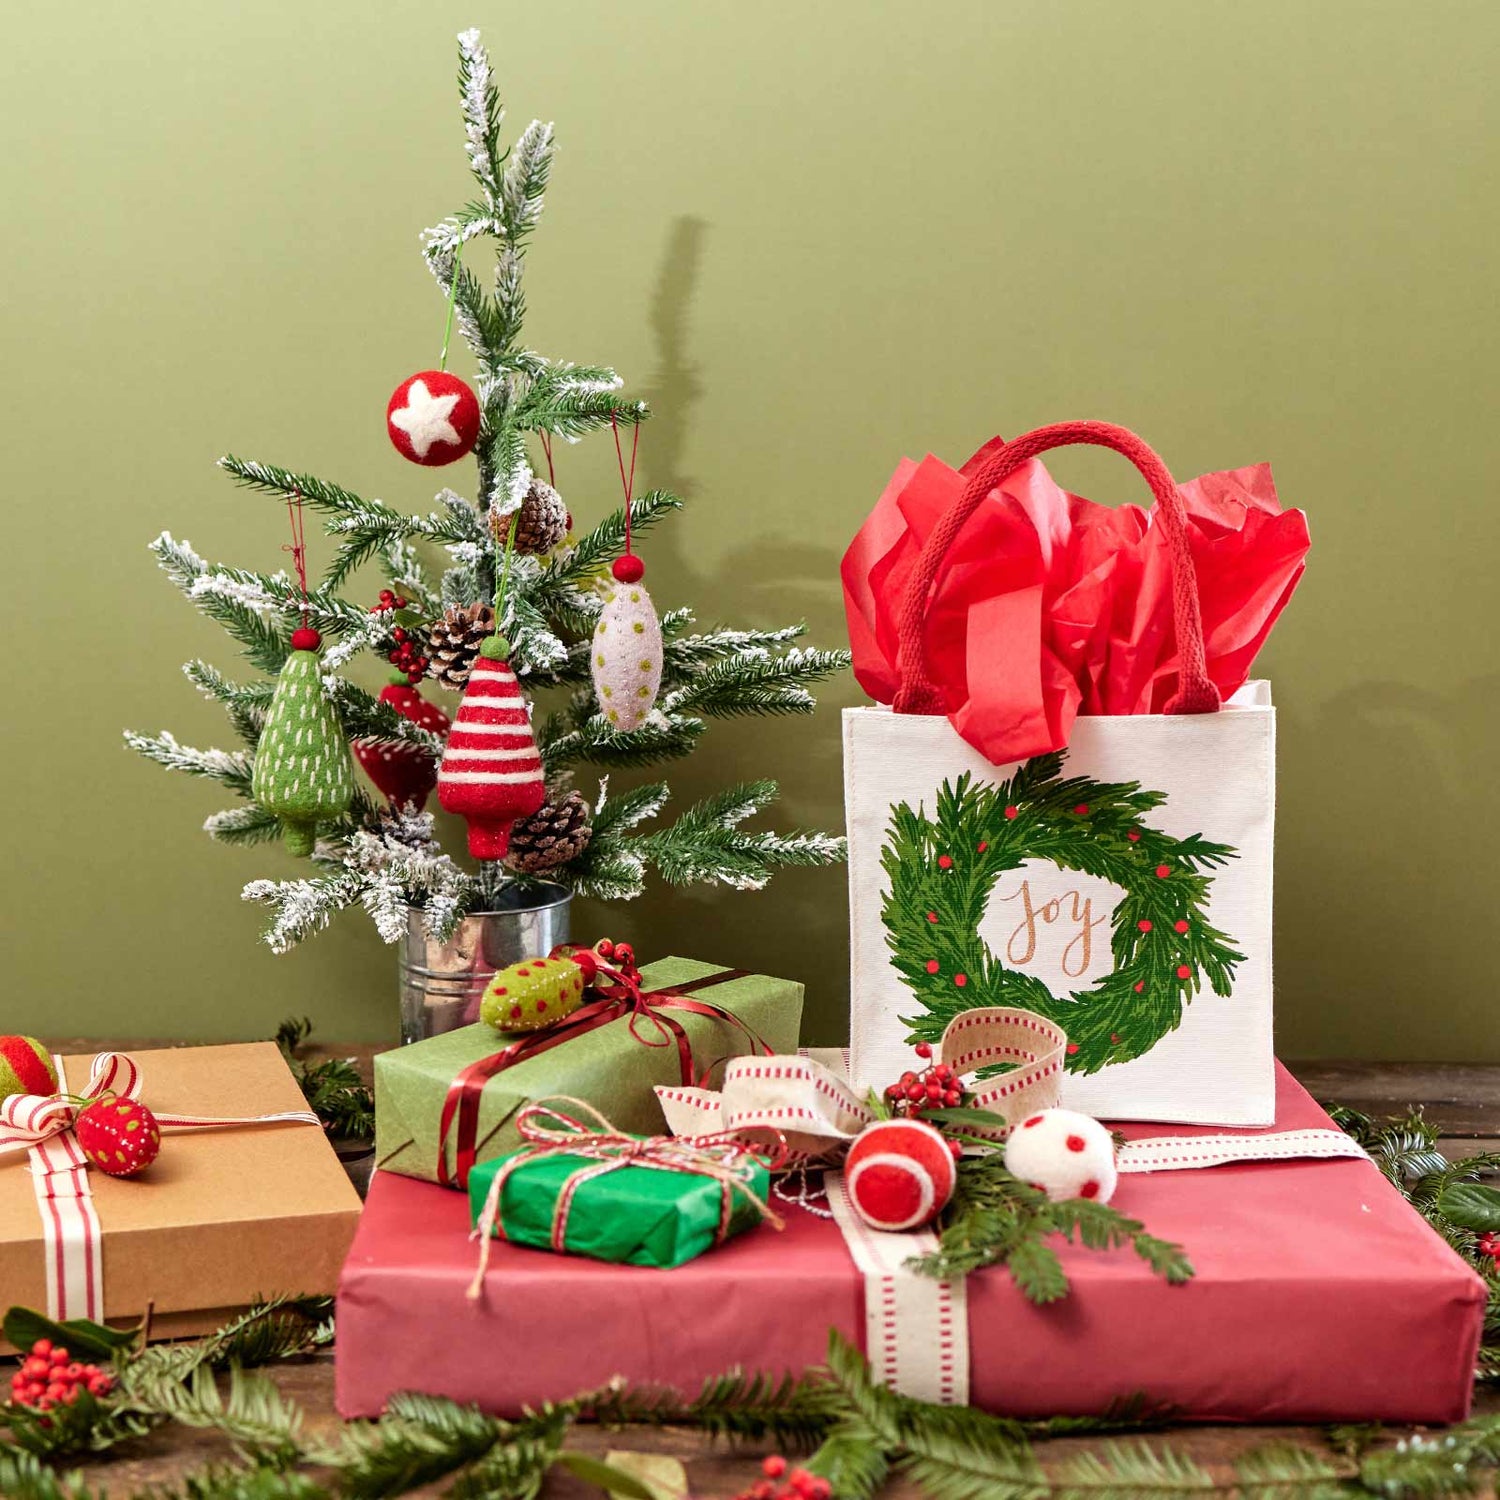 DIY Felt Christmas Tree Ornaments – English Rose from Manchester's Blog